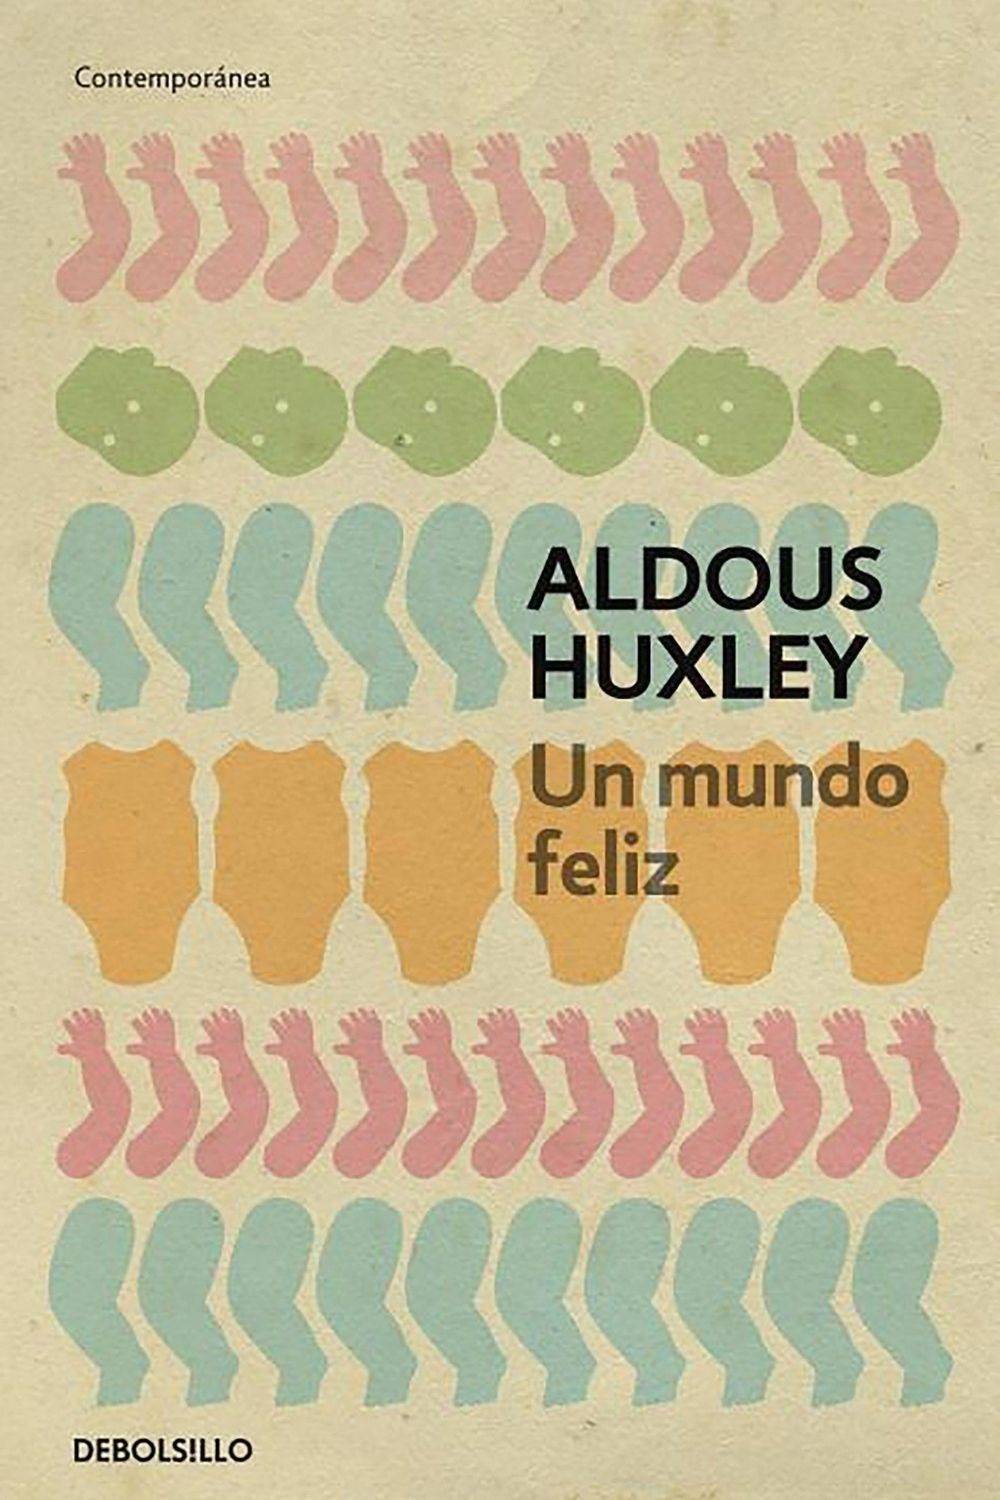 ‘Un mundo feliz’ de Aldous Huxley